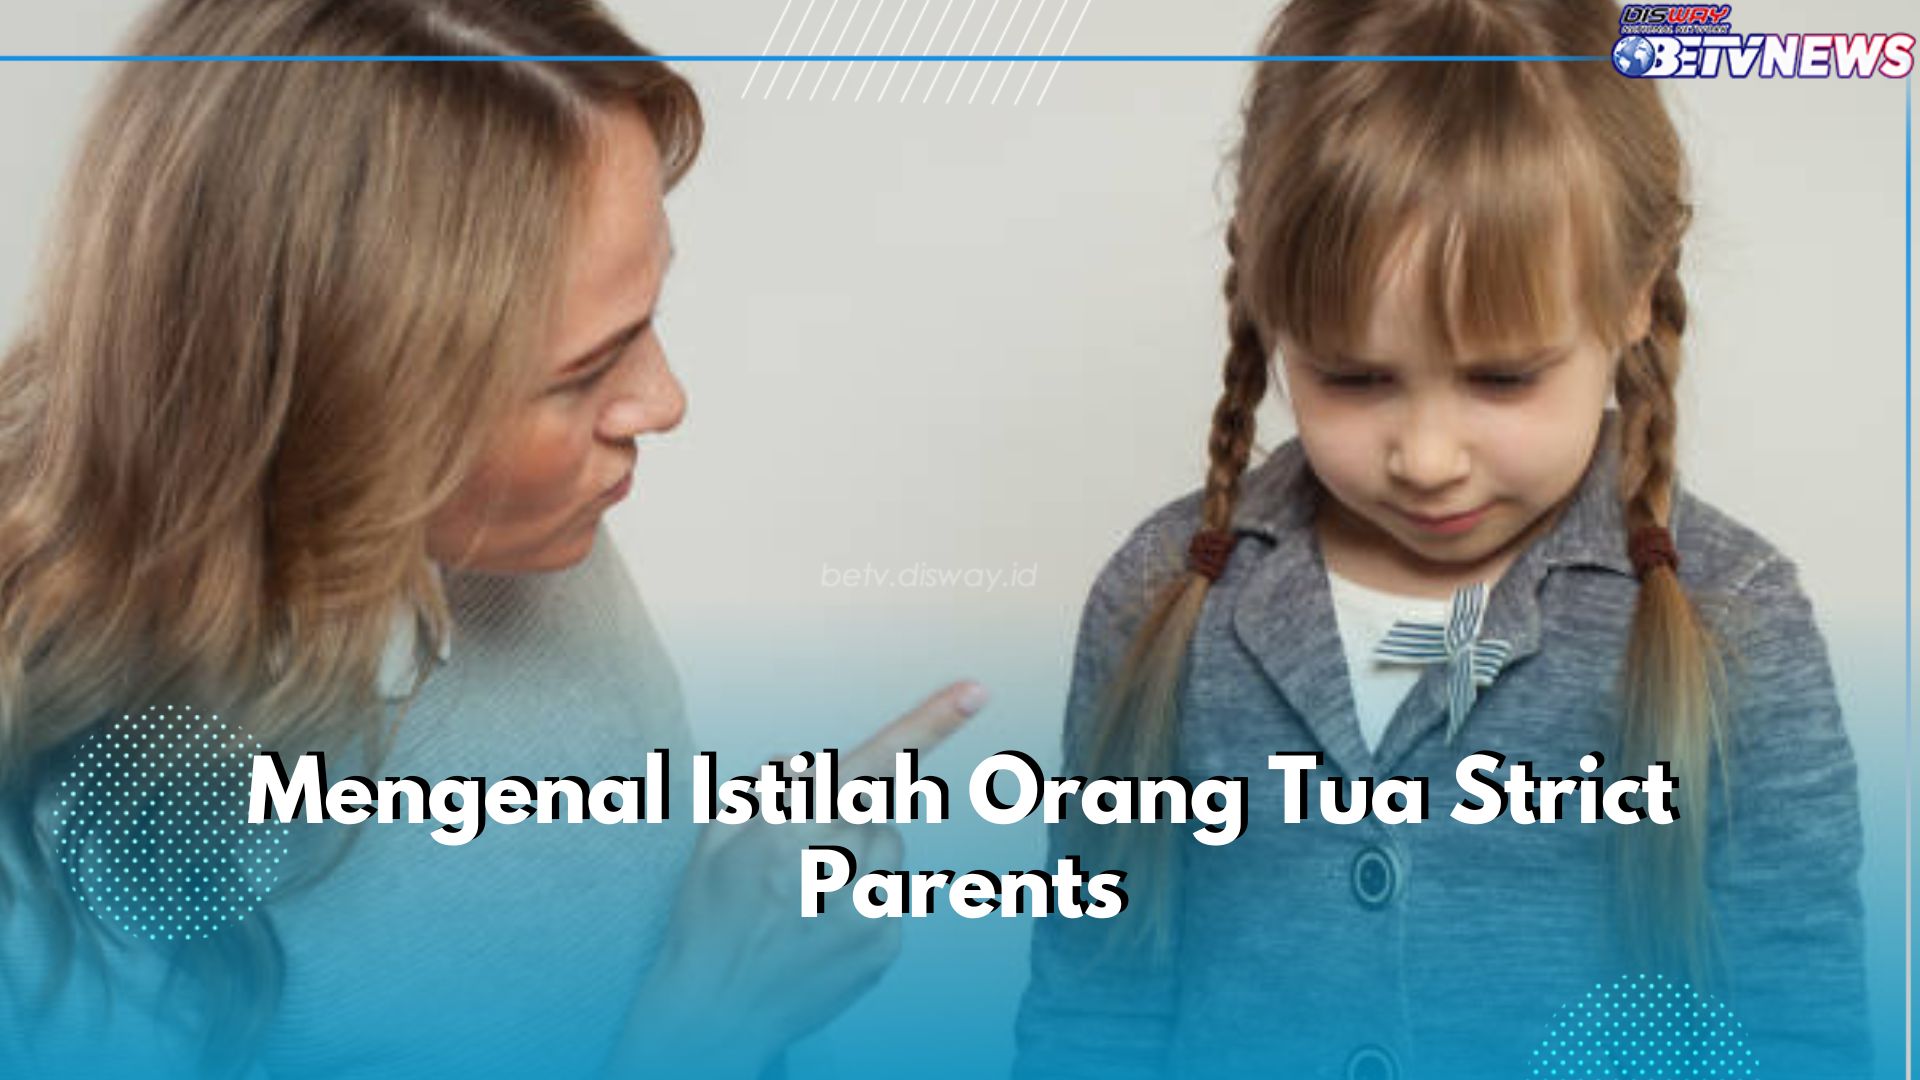 Kenali Istilah Strict Parents, Pola Asuh Penuh Tuntutan yang Bikin Anak Terkekang, Apa Dampaknya?